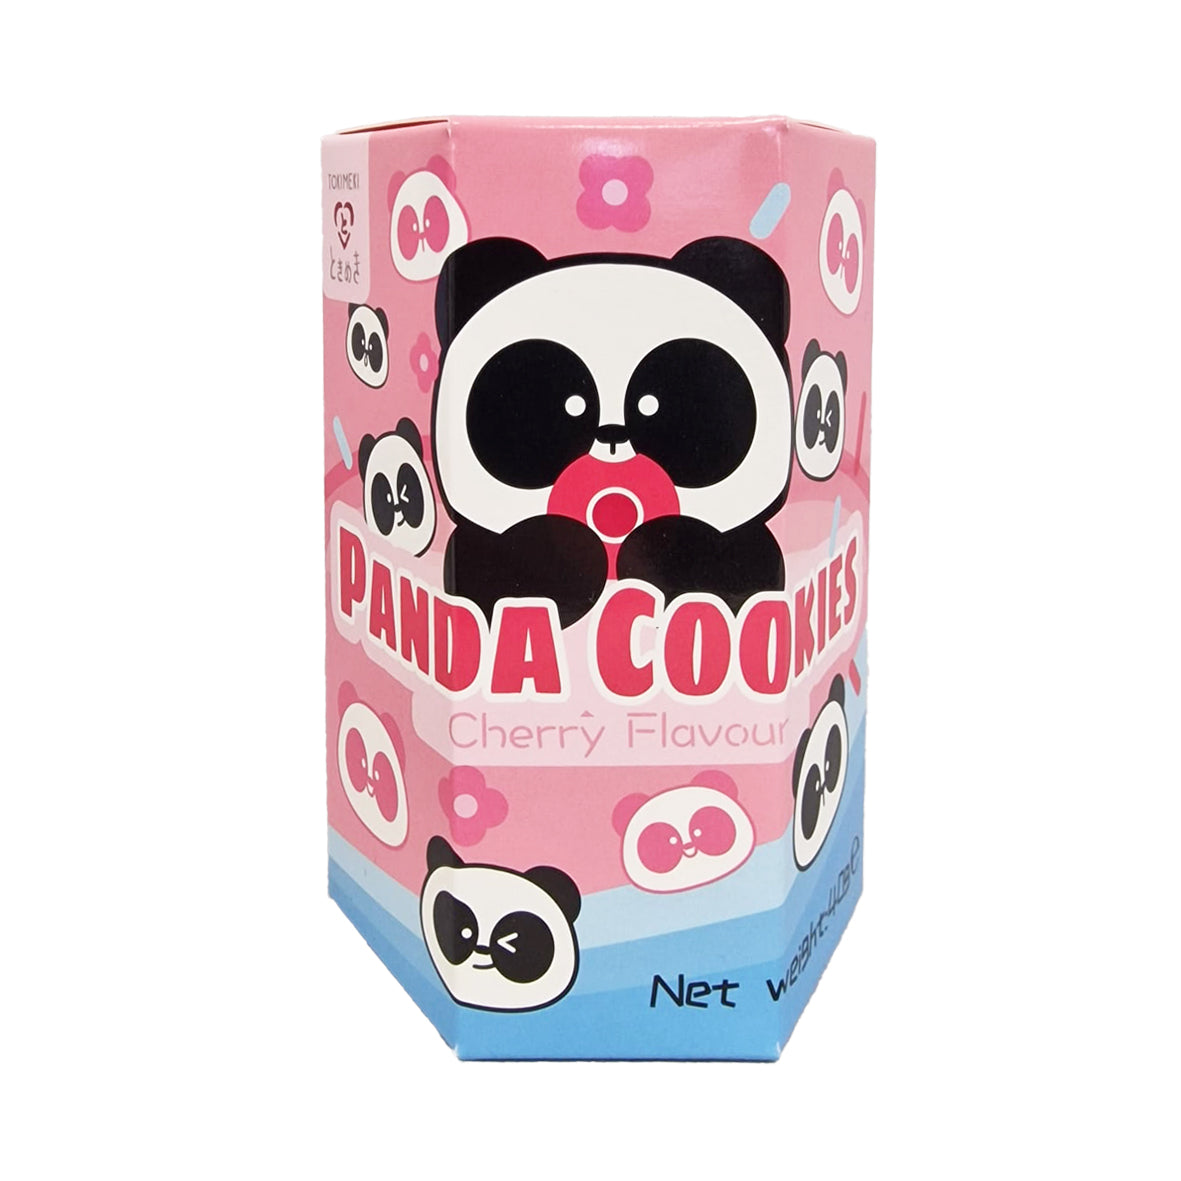 Panda Cookies - Cherry Flavour